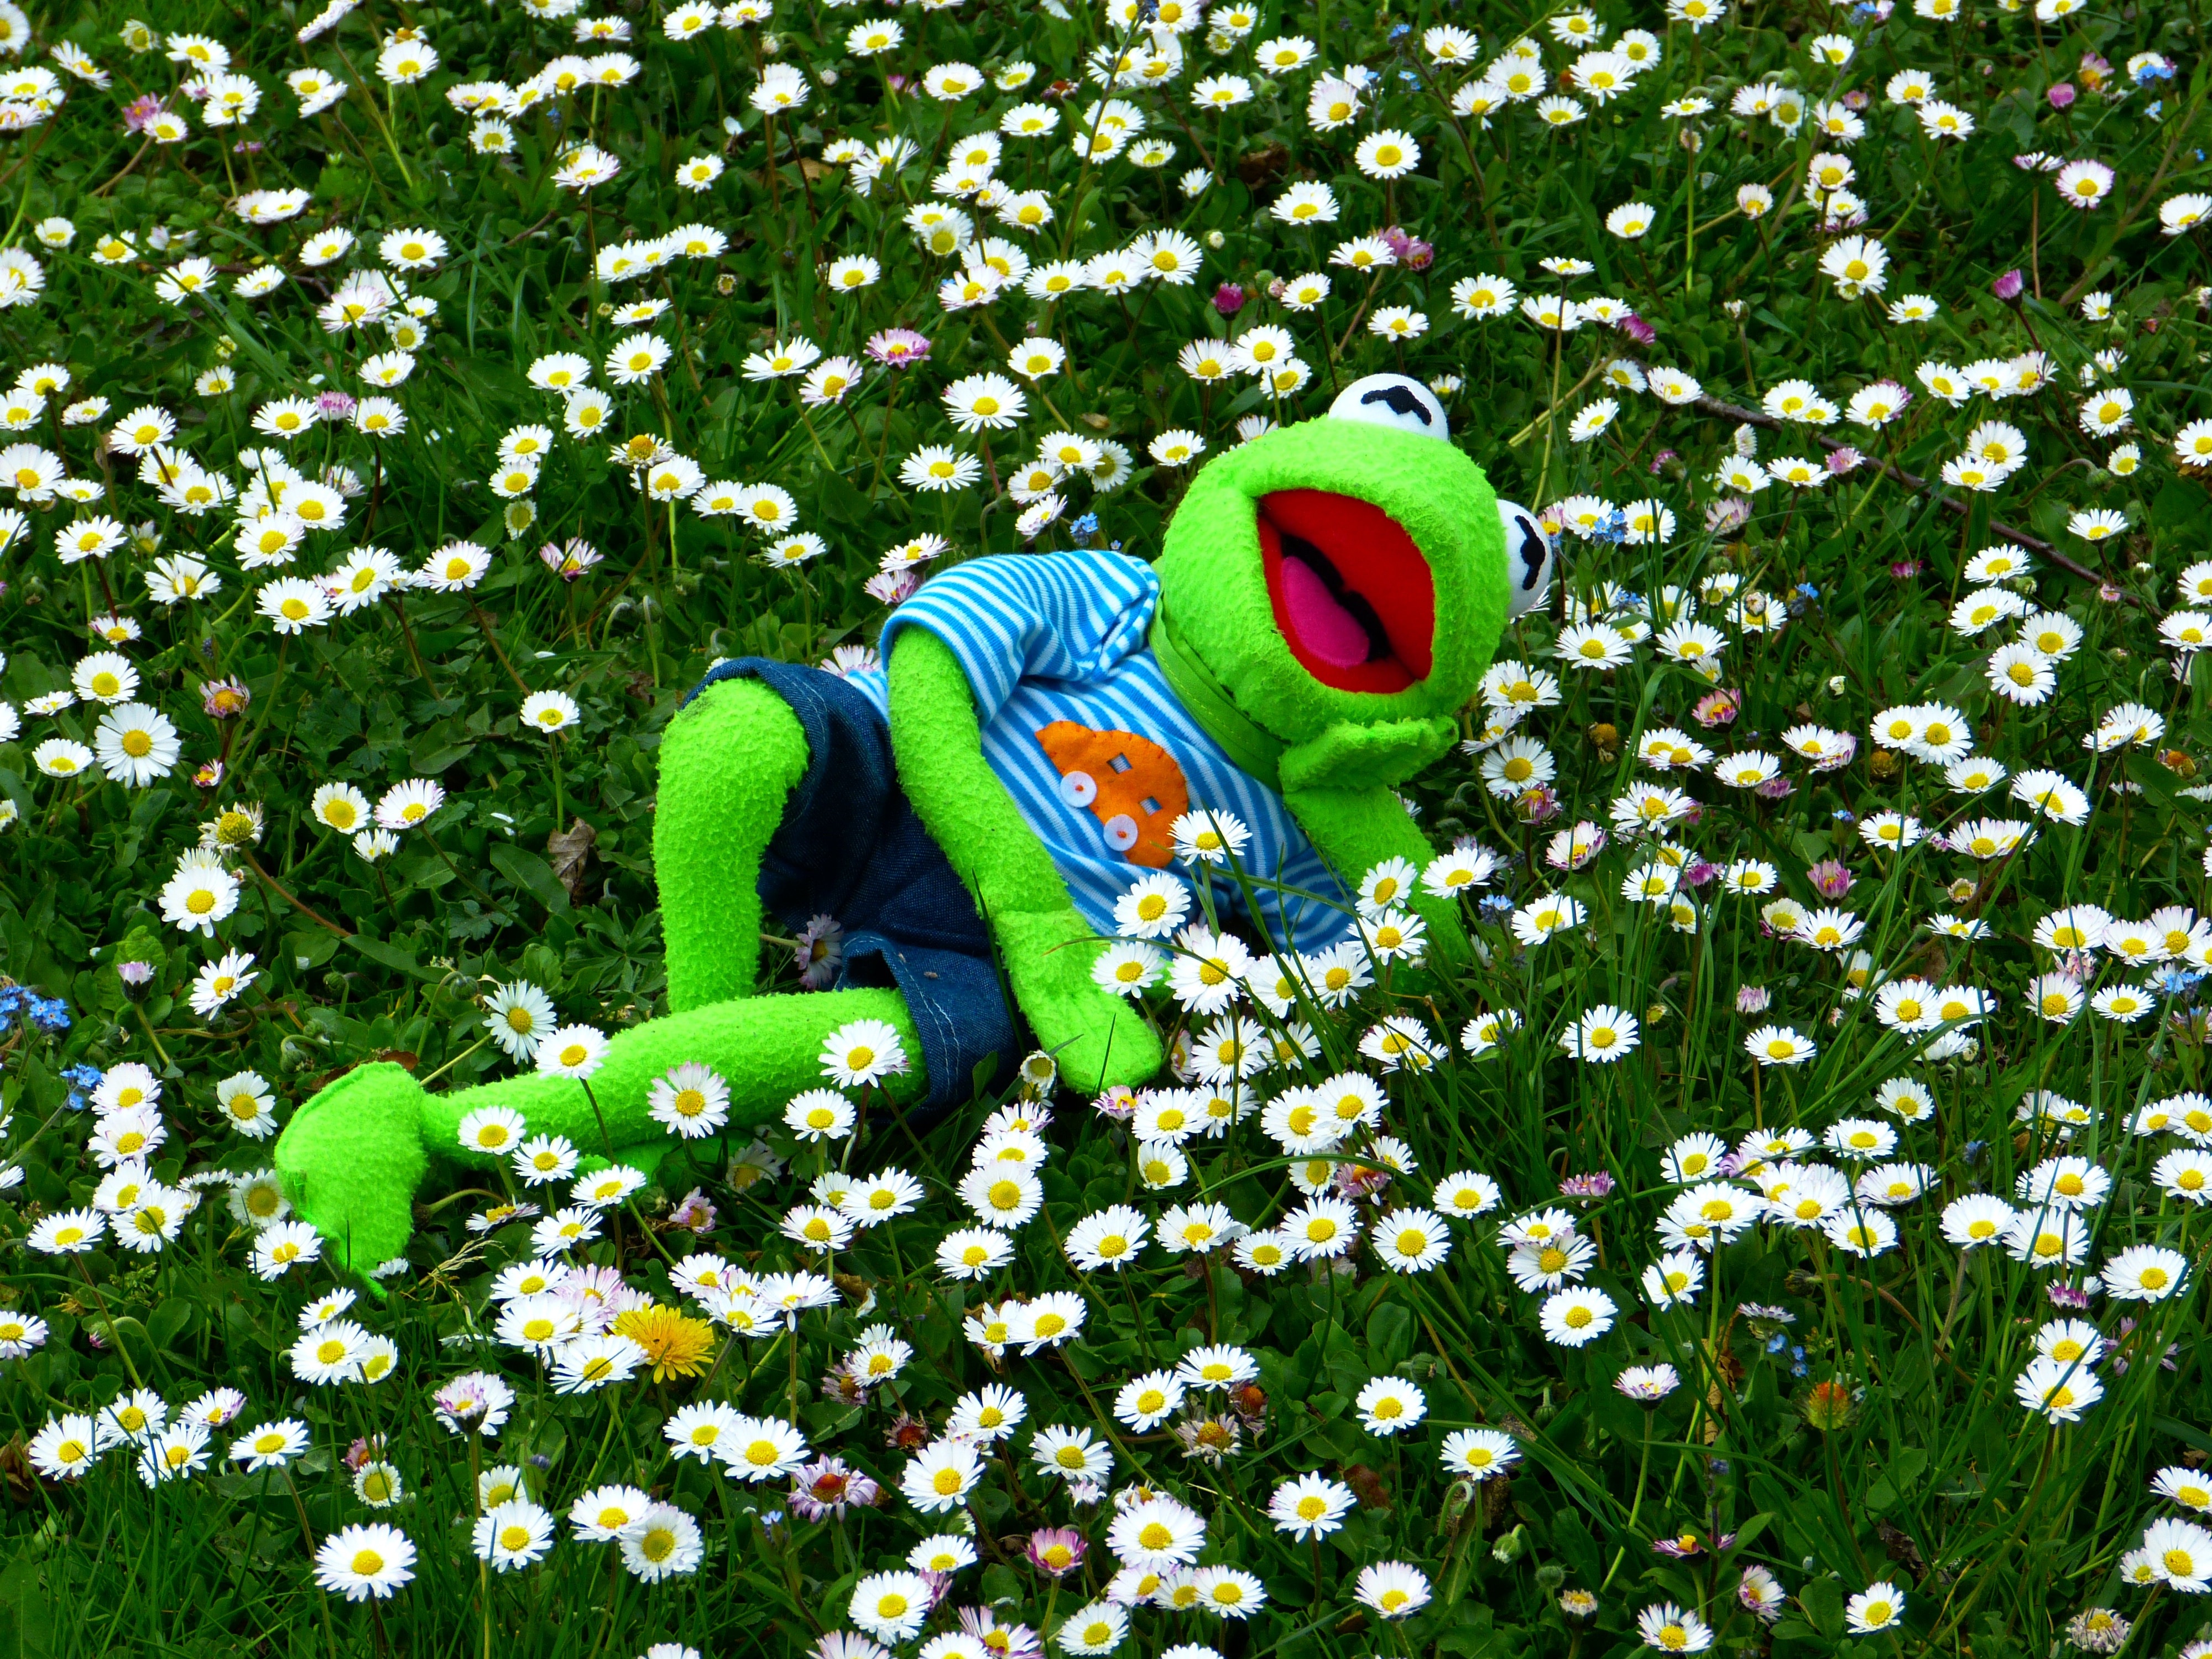 Concerns, Kermit, Frog, Meadow, Daisy, green color, day